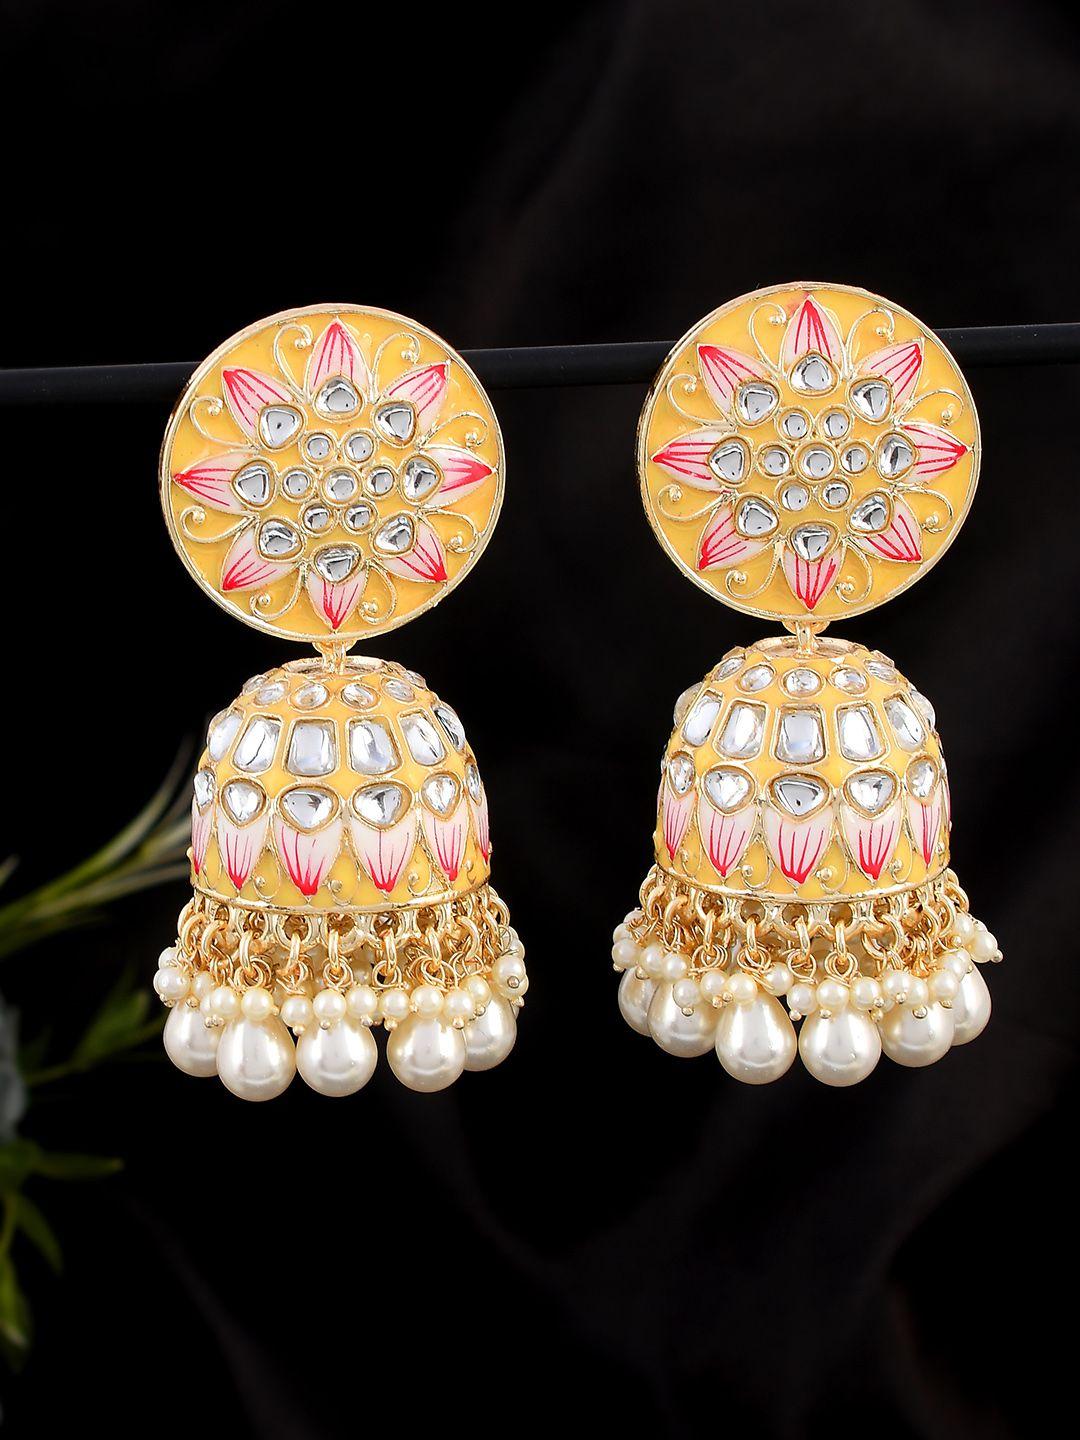 aquastreet jewels gold plated dome shaped jhumkas earrings